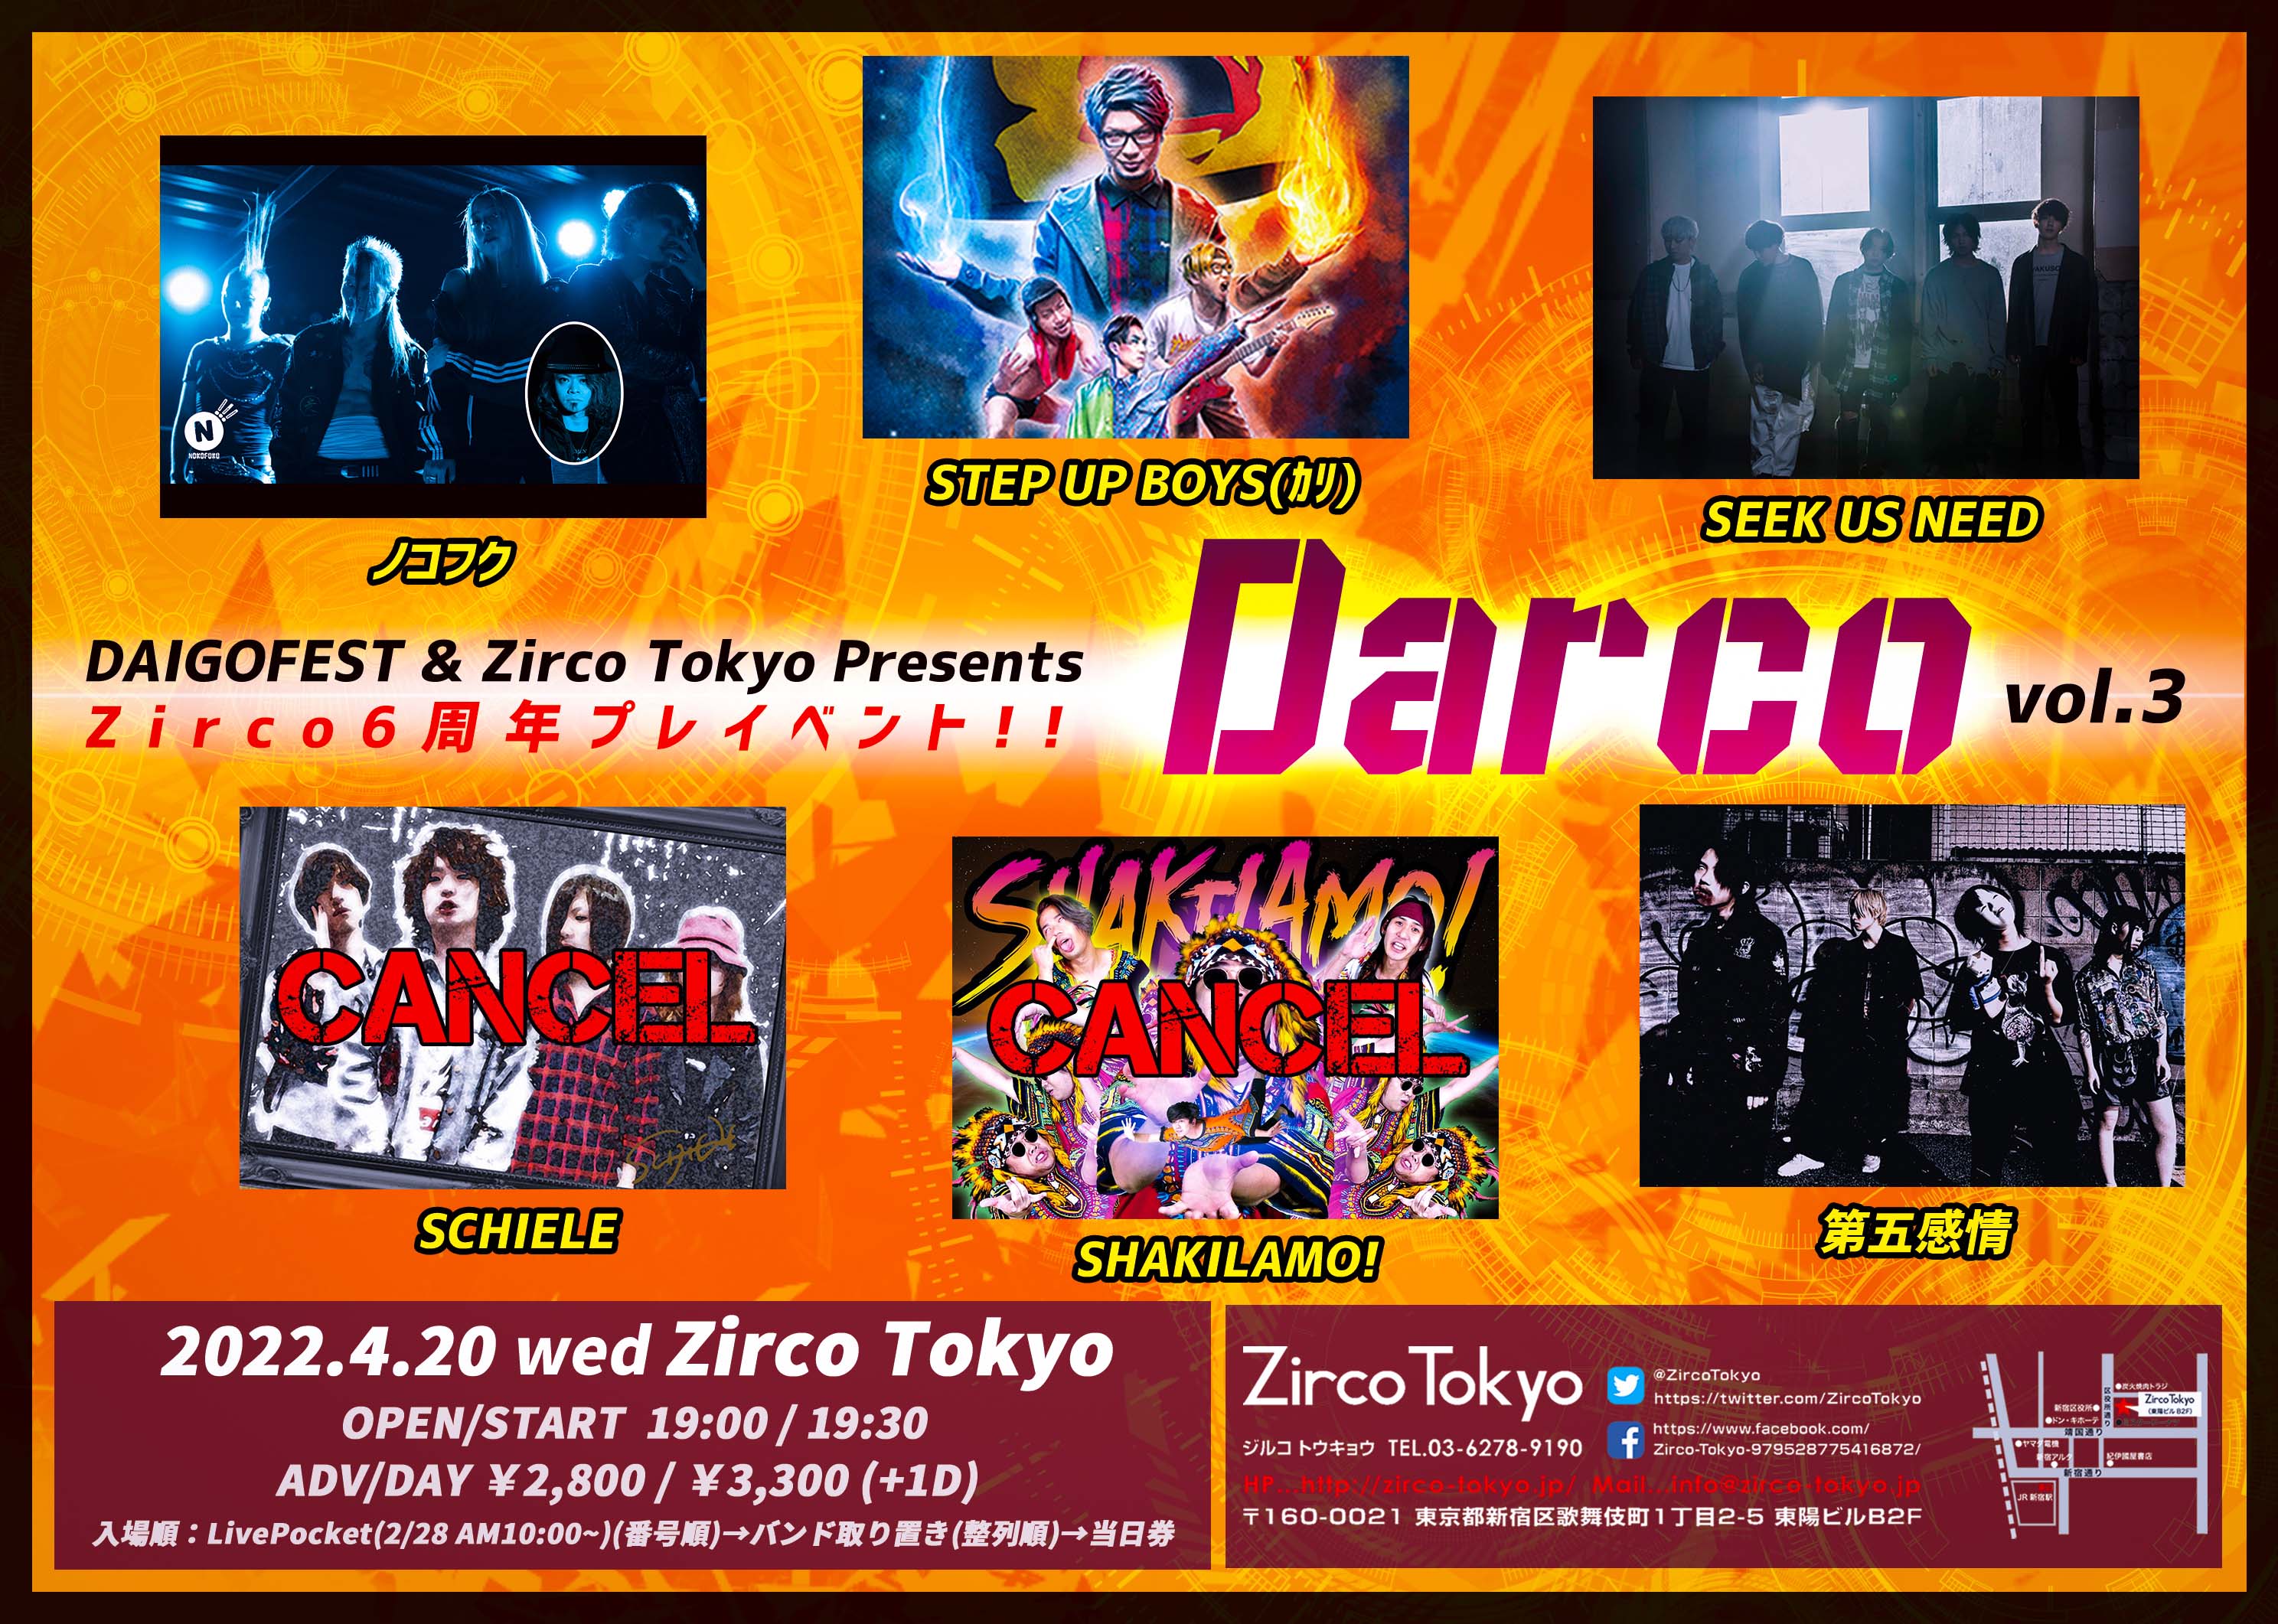 Zirco 6周年プレイベント!! DAIGOFEST & Zirco Tokyo Presents 「Darco」vol.3